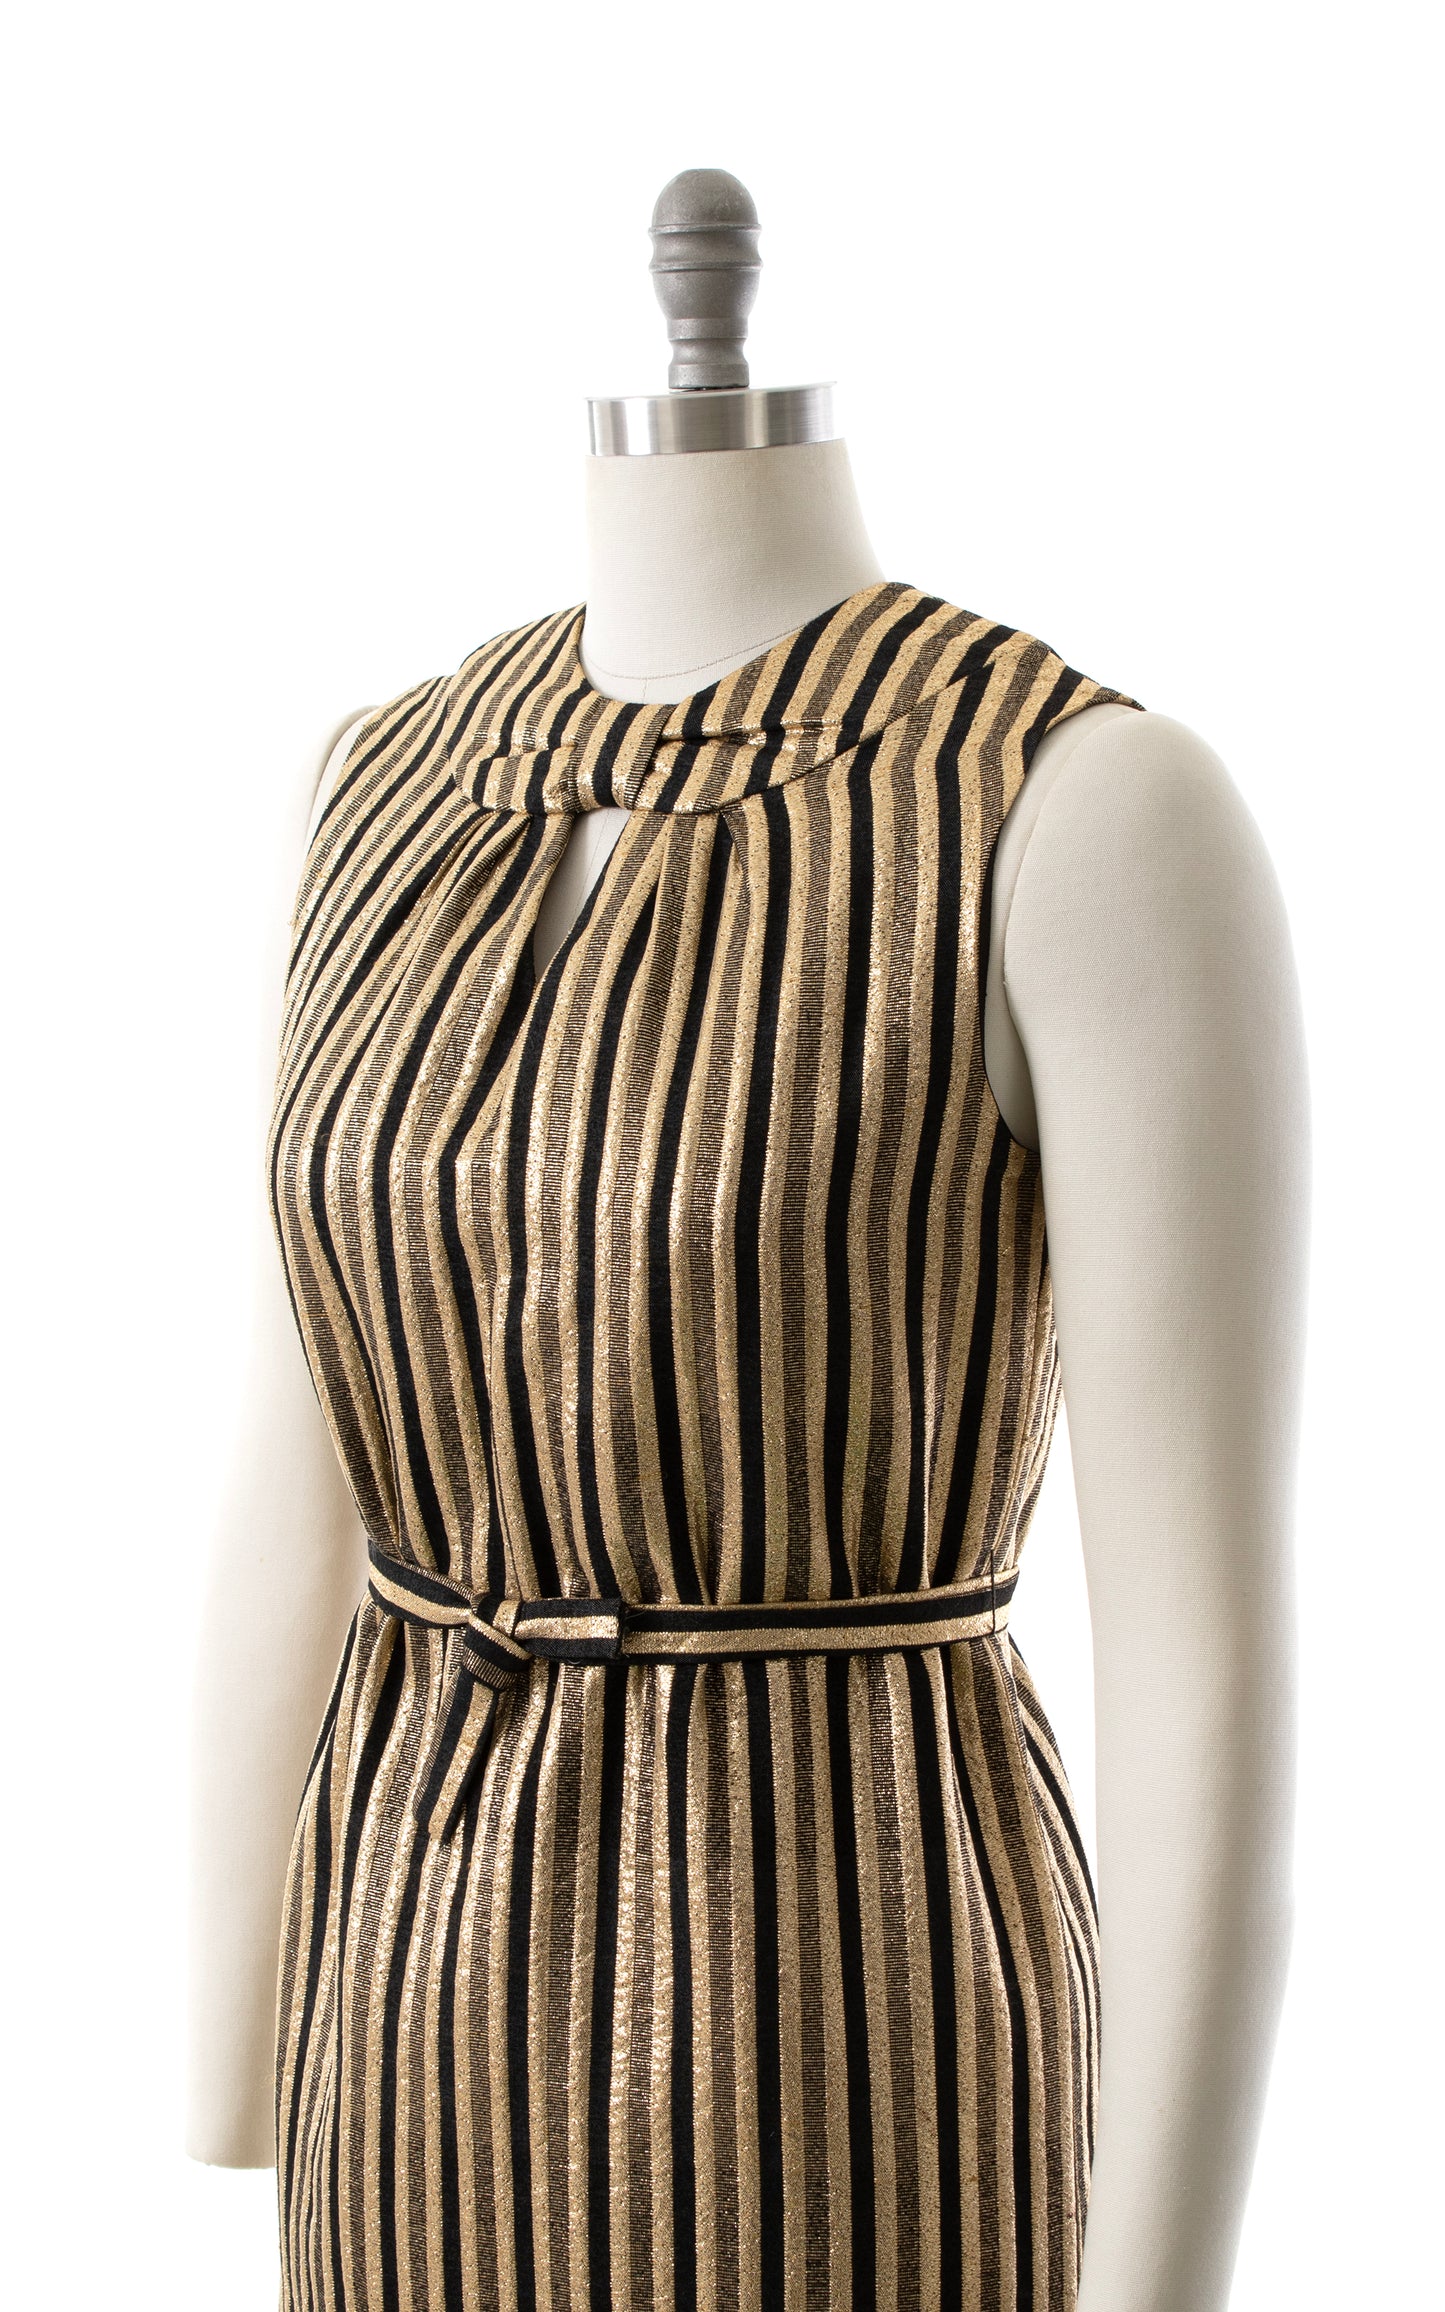 NEW ARRIVAL || 1960s Metallic Gold Striped Shift Dress | small